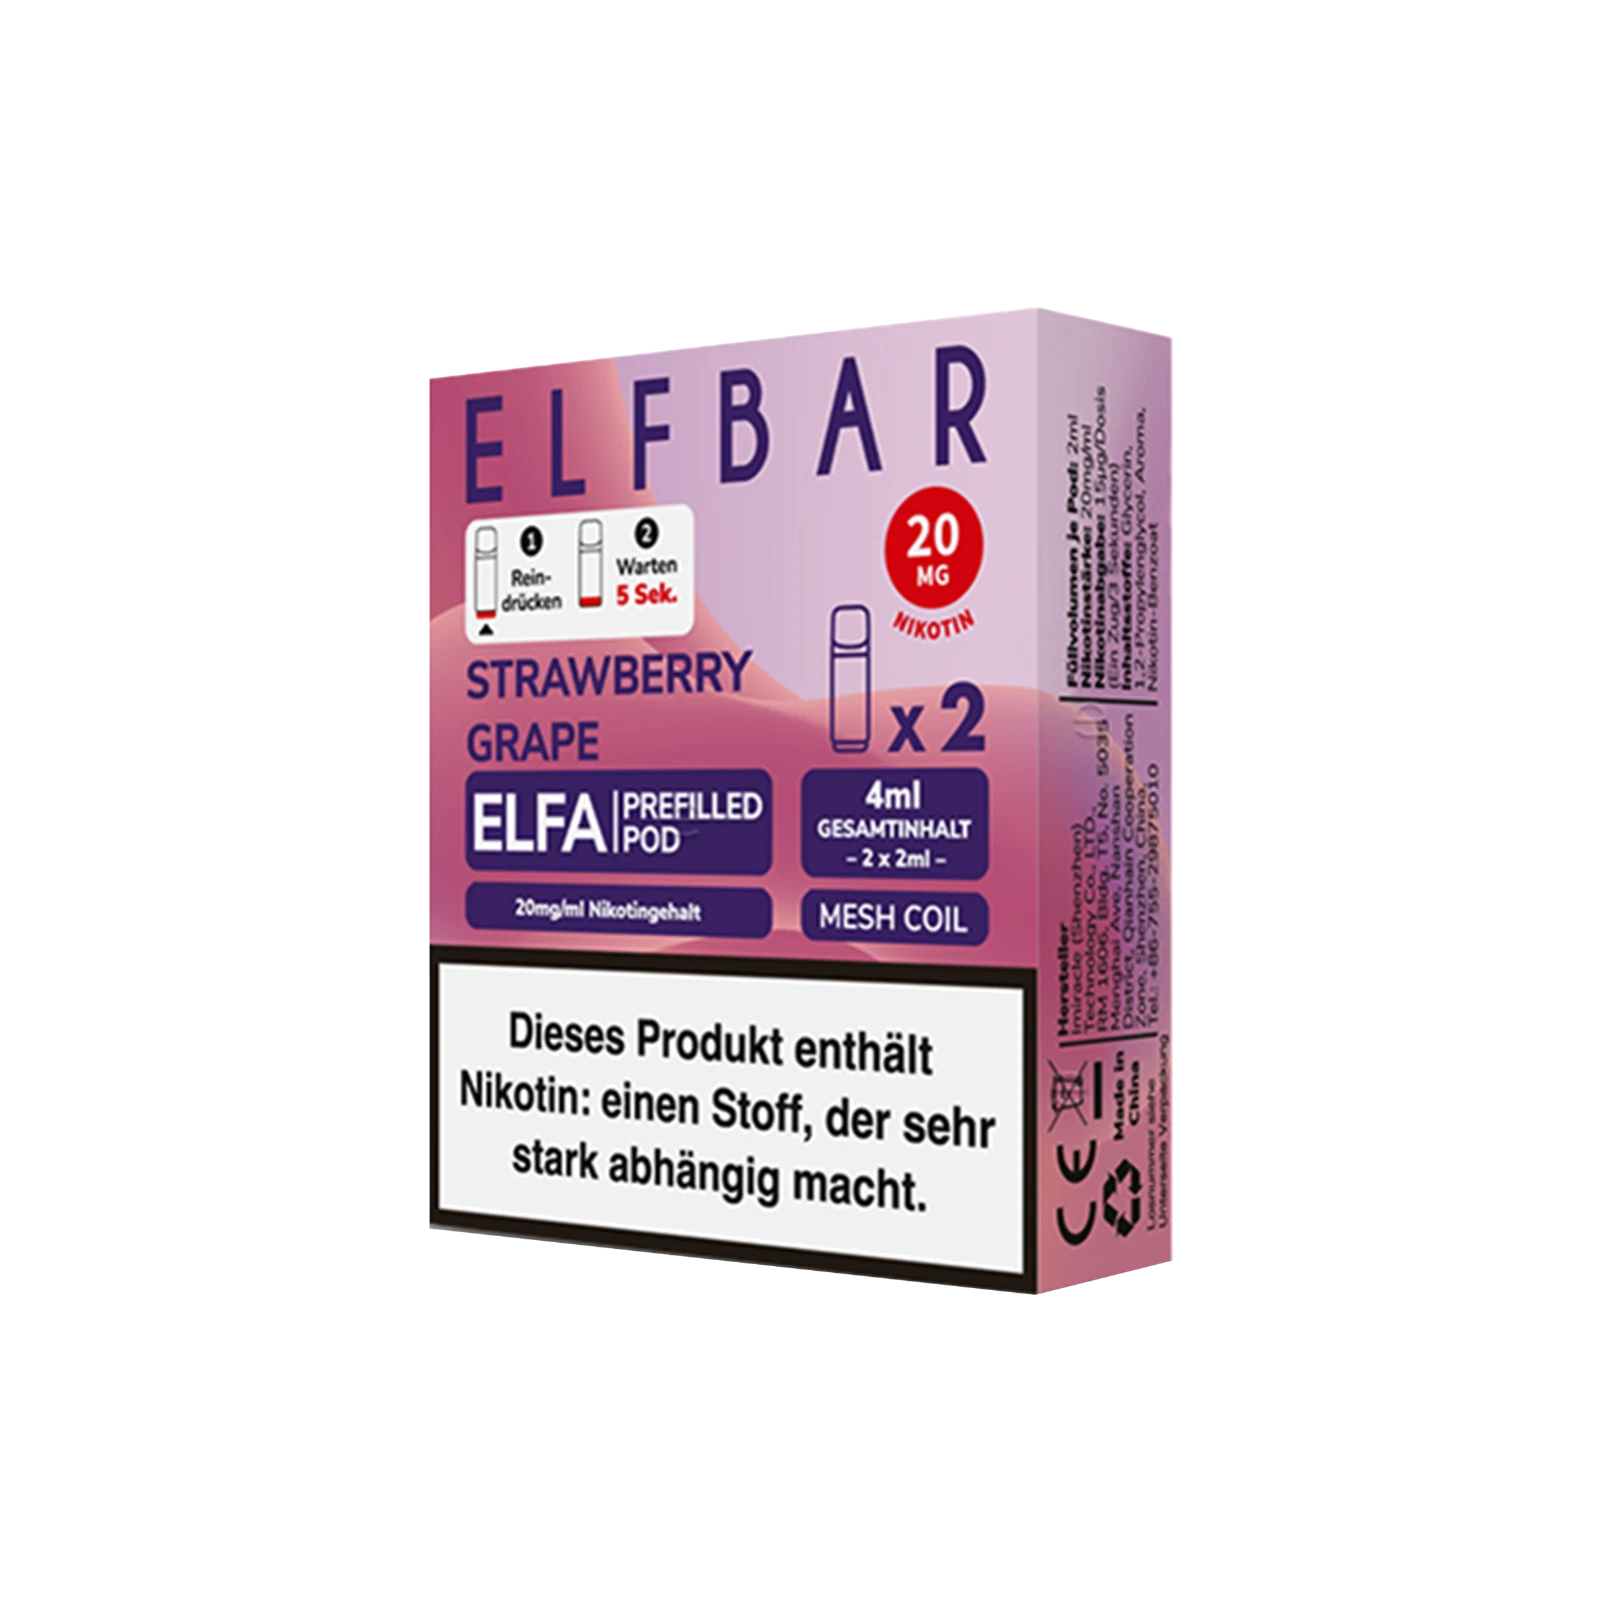 Elf Bar ELFA CP Prefilled Pod Strawberry Grape | Neue Liquid Sorten1